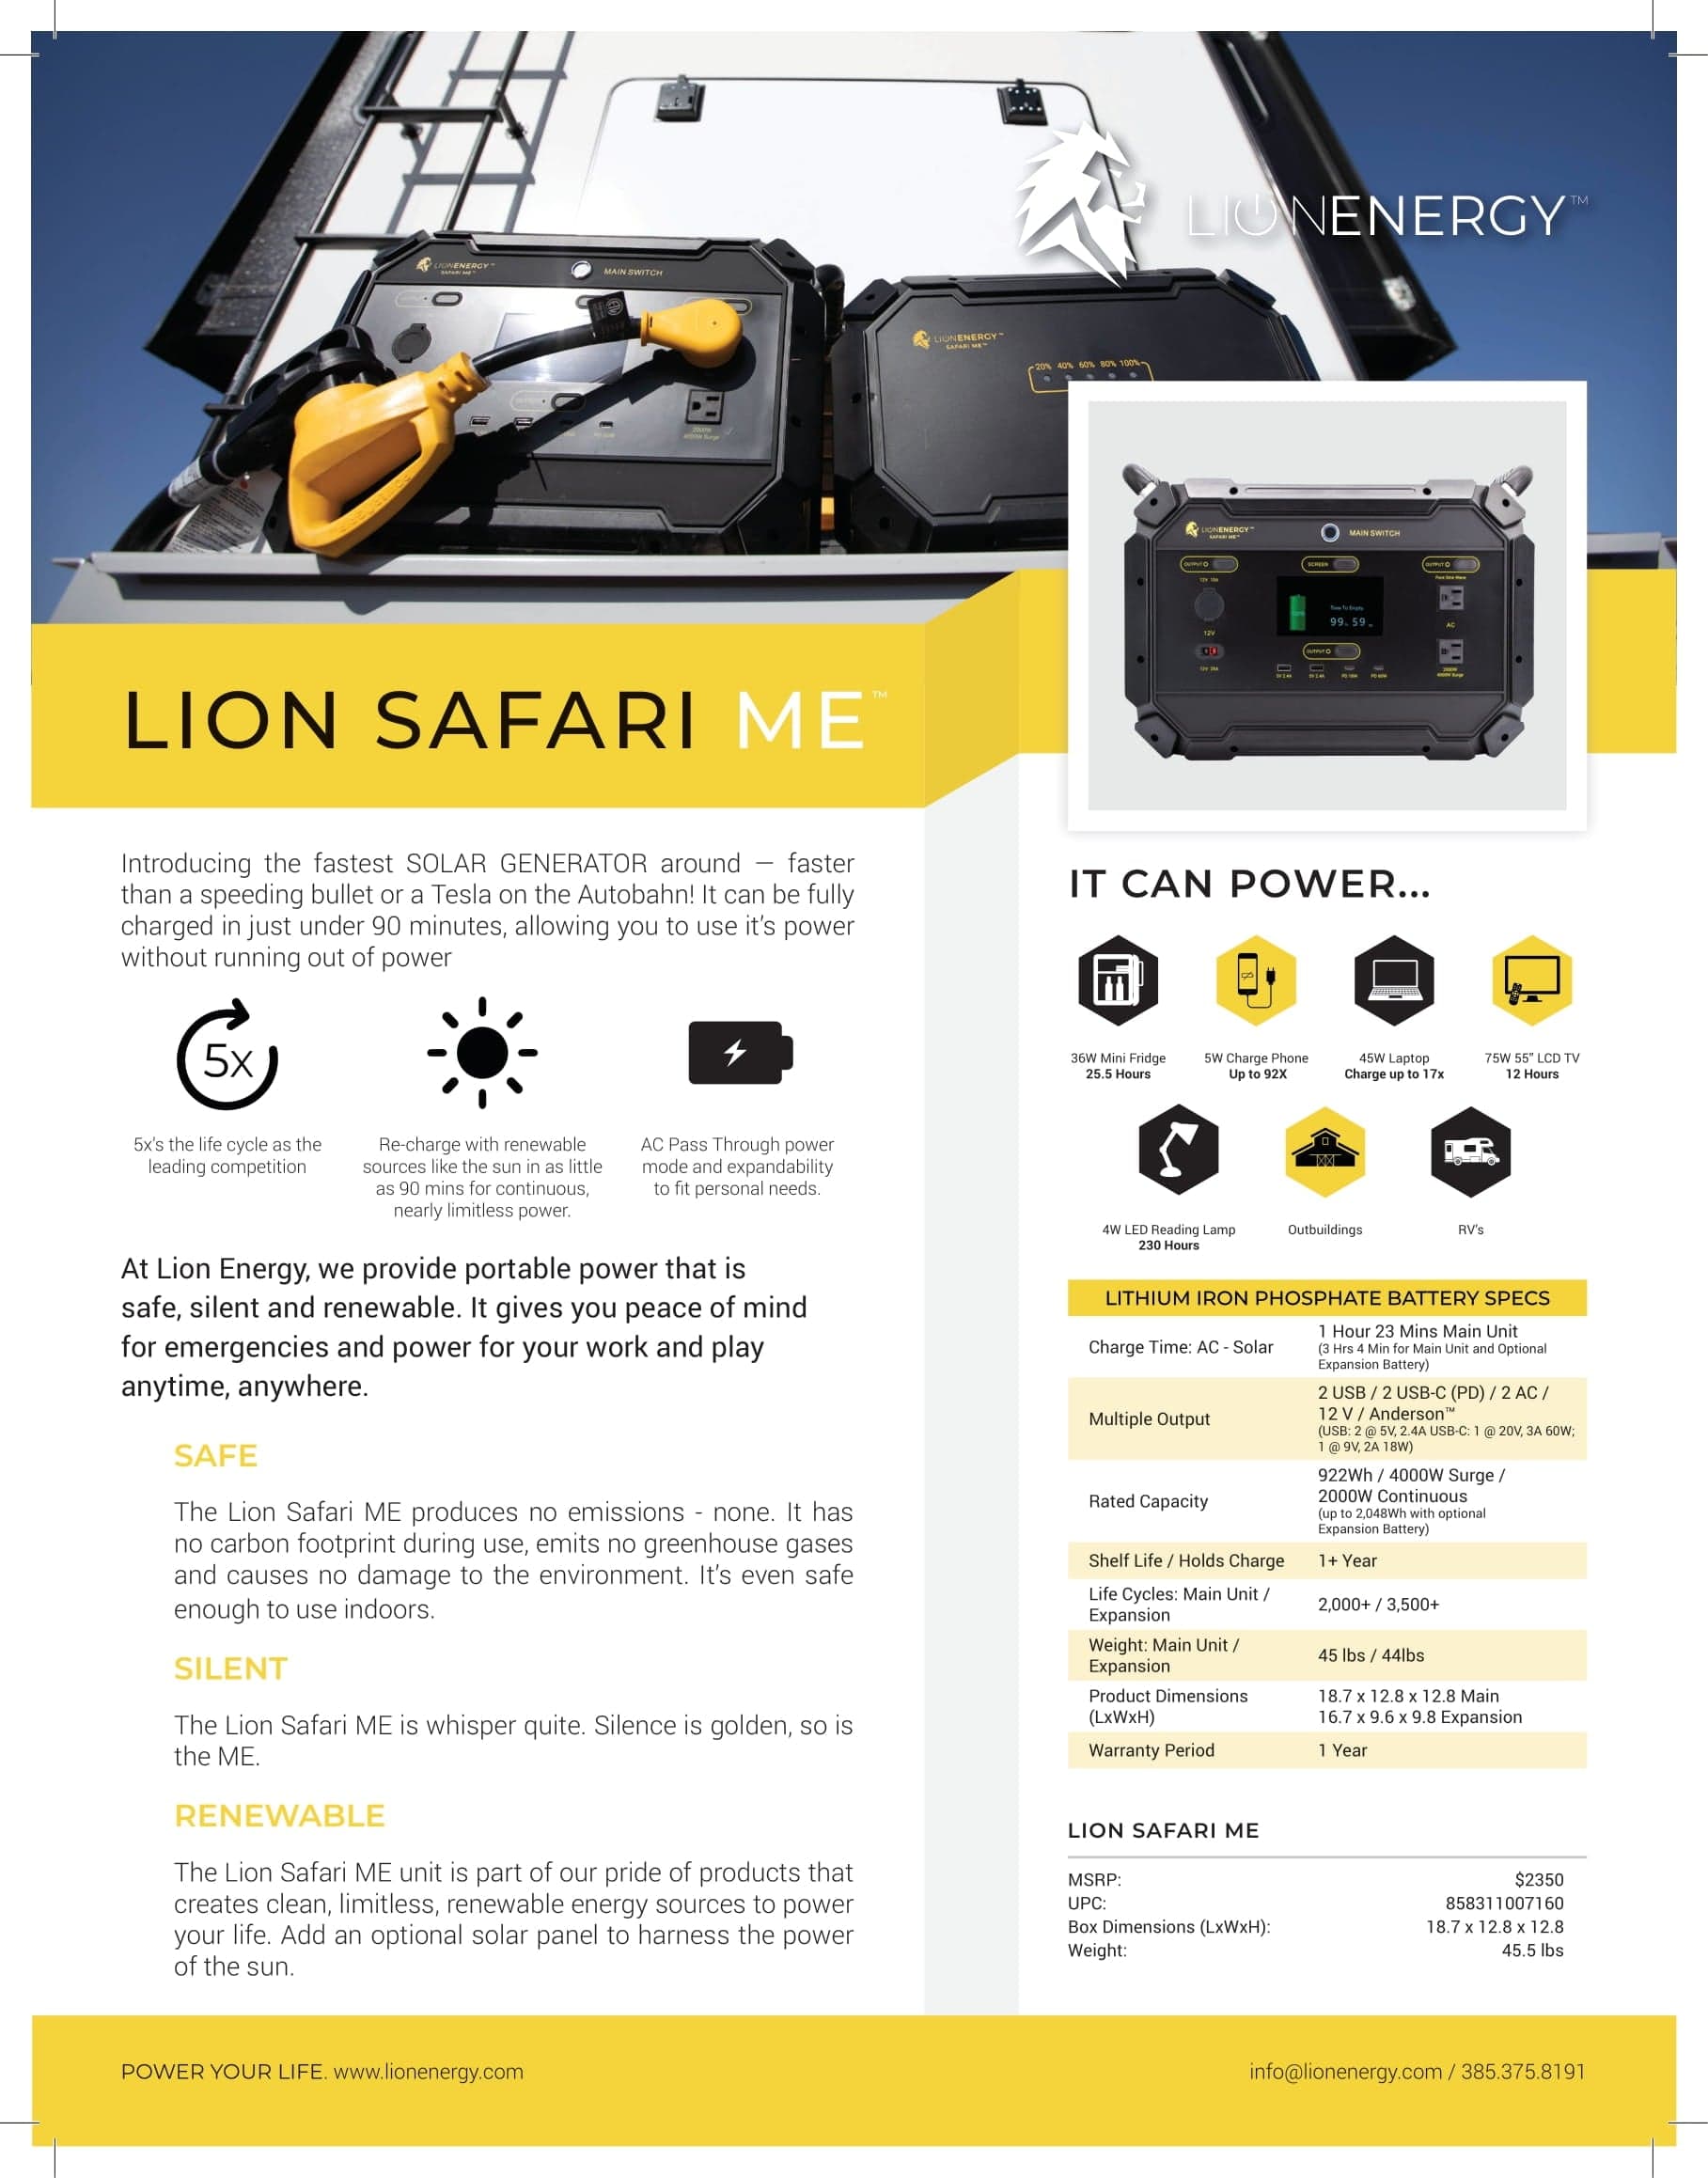 Safari ME Portable Generator Portable Power Lion Energy   